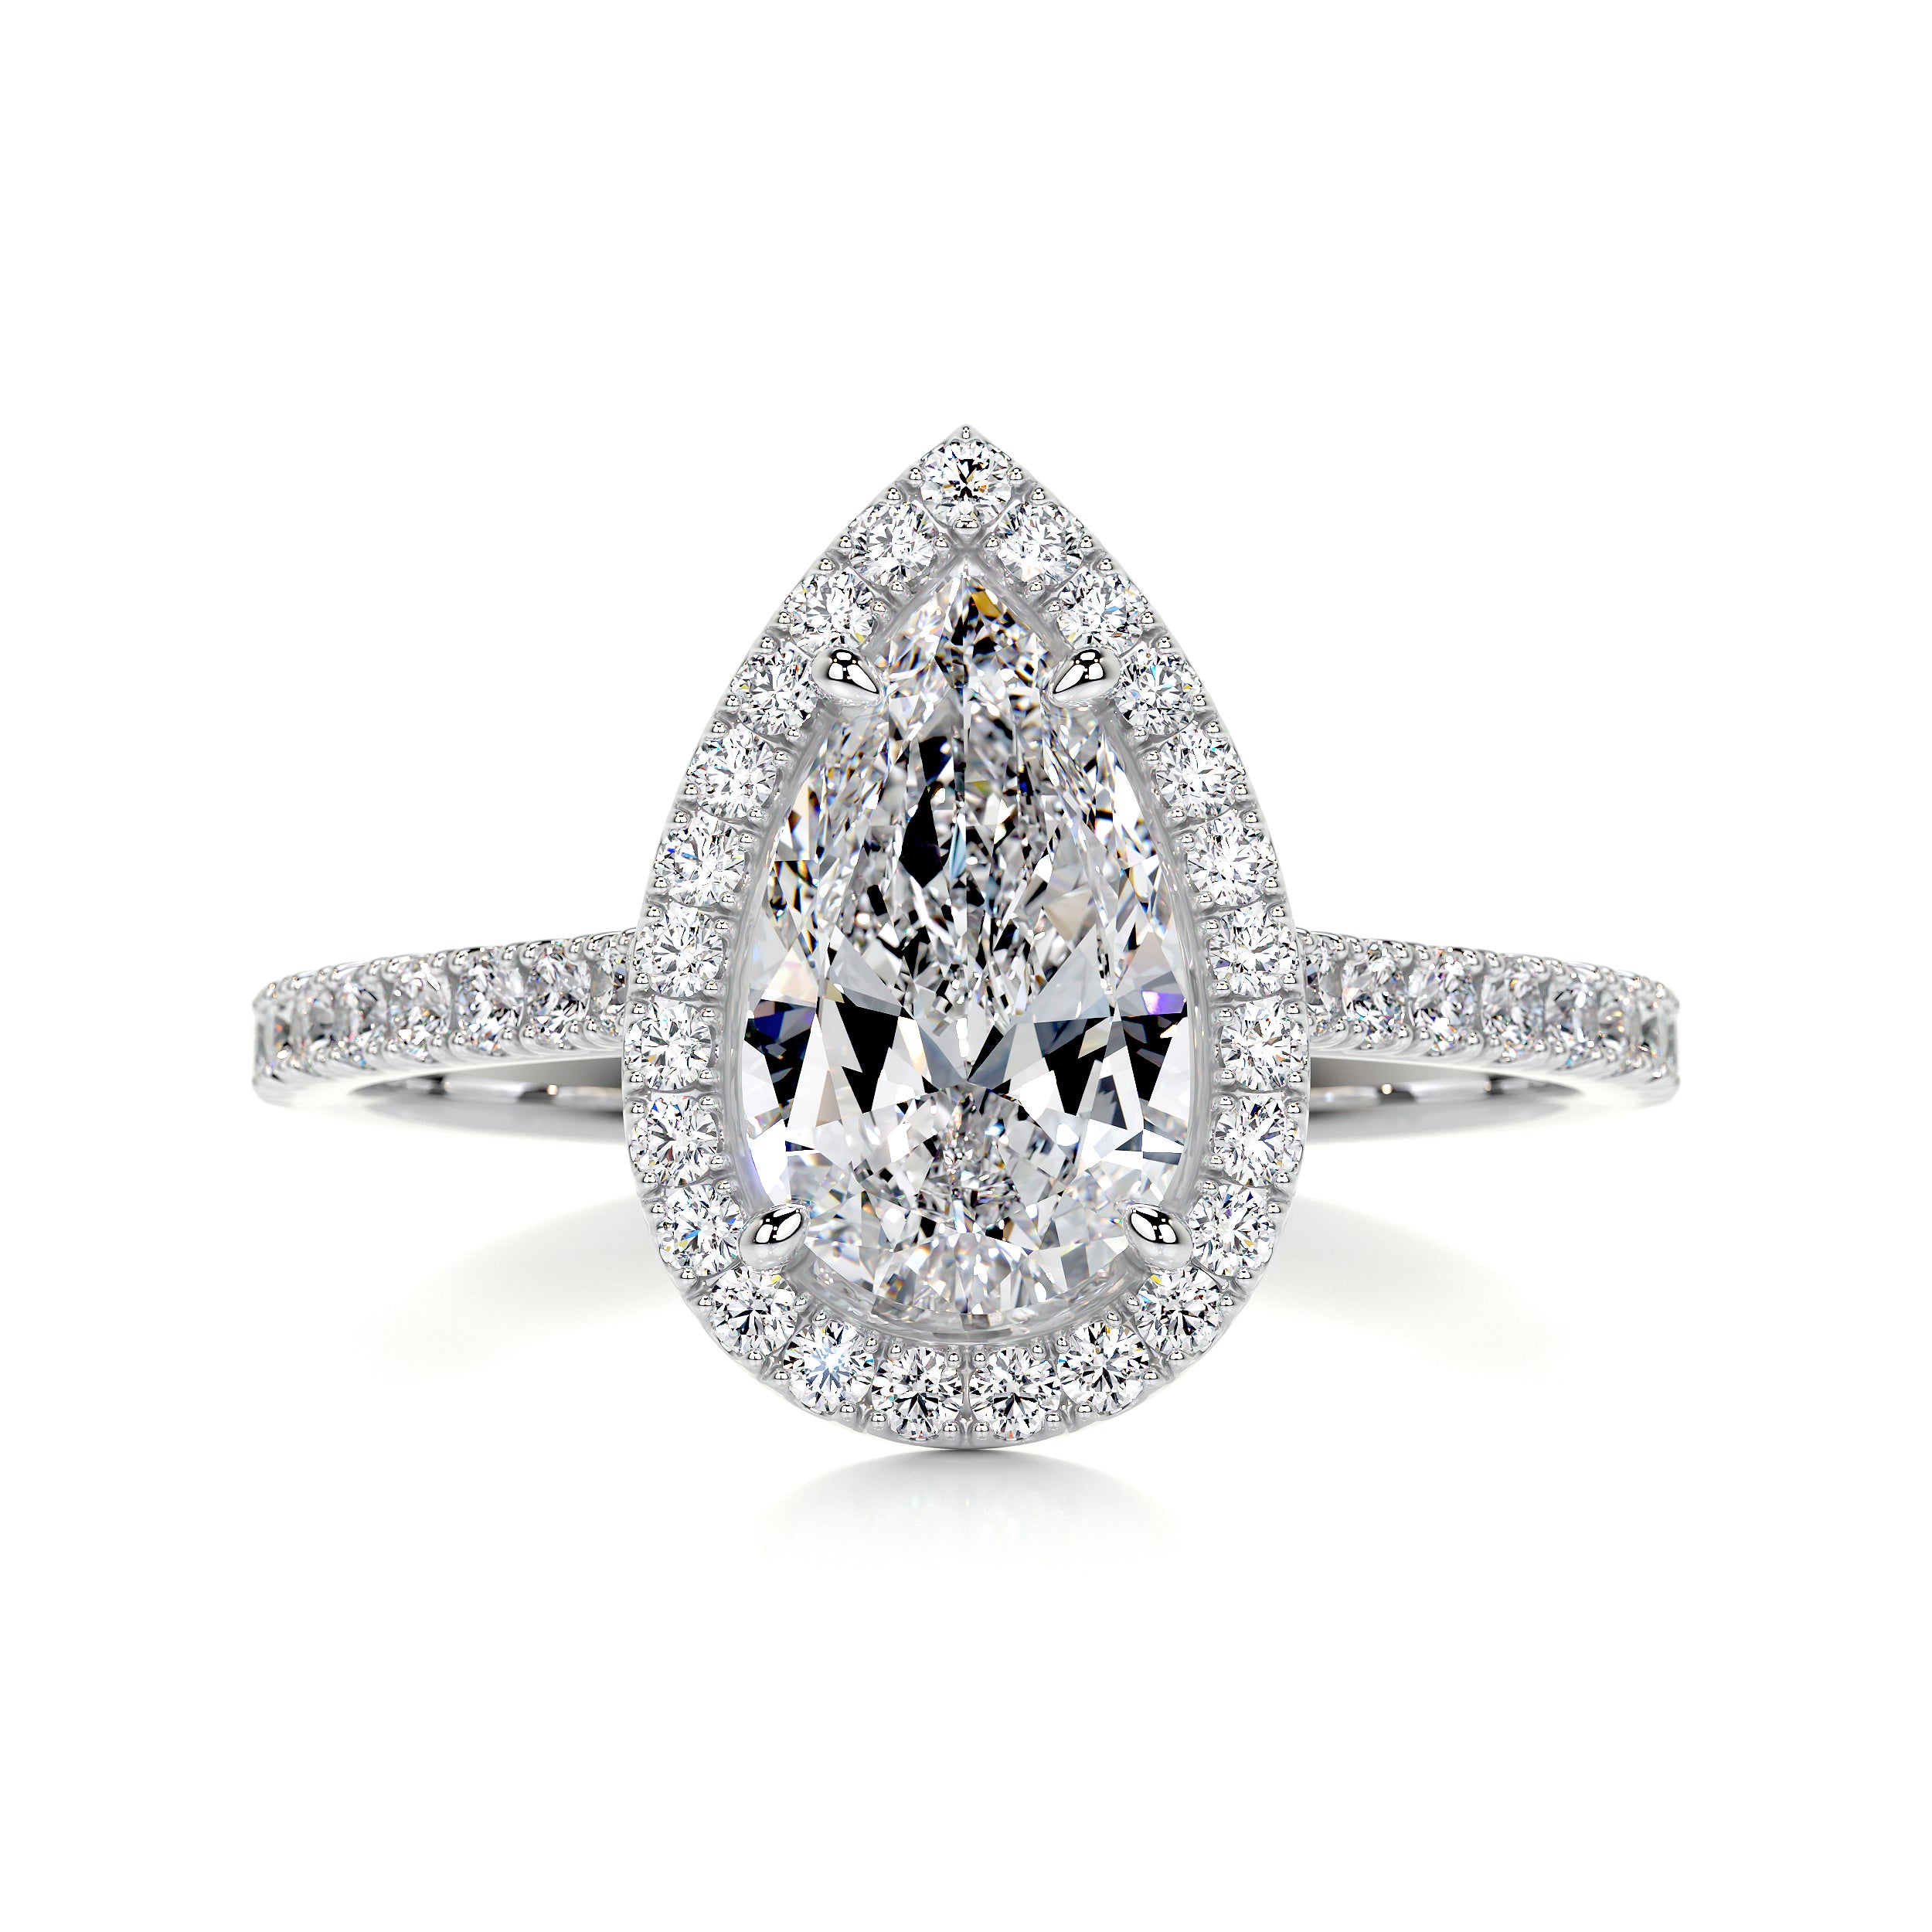 Two Finger Ring - Double Finger Ring - 2 Finger Ring Design - Custom Name  Ring - Statement Ring For Women, Wife, Girlfriend : : Handmade  Products